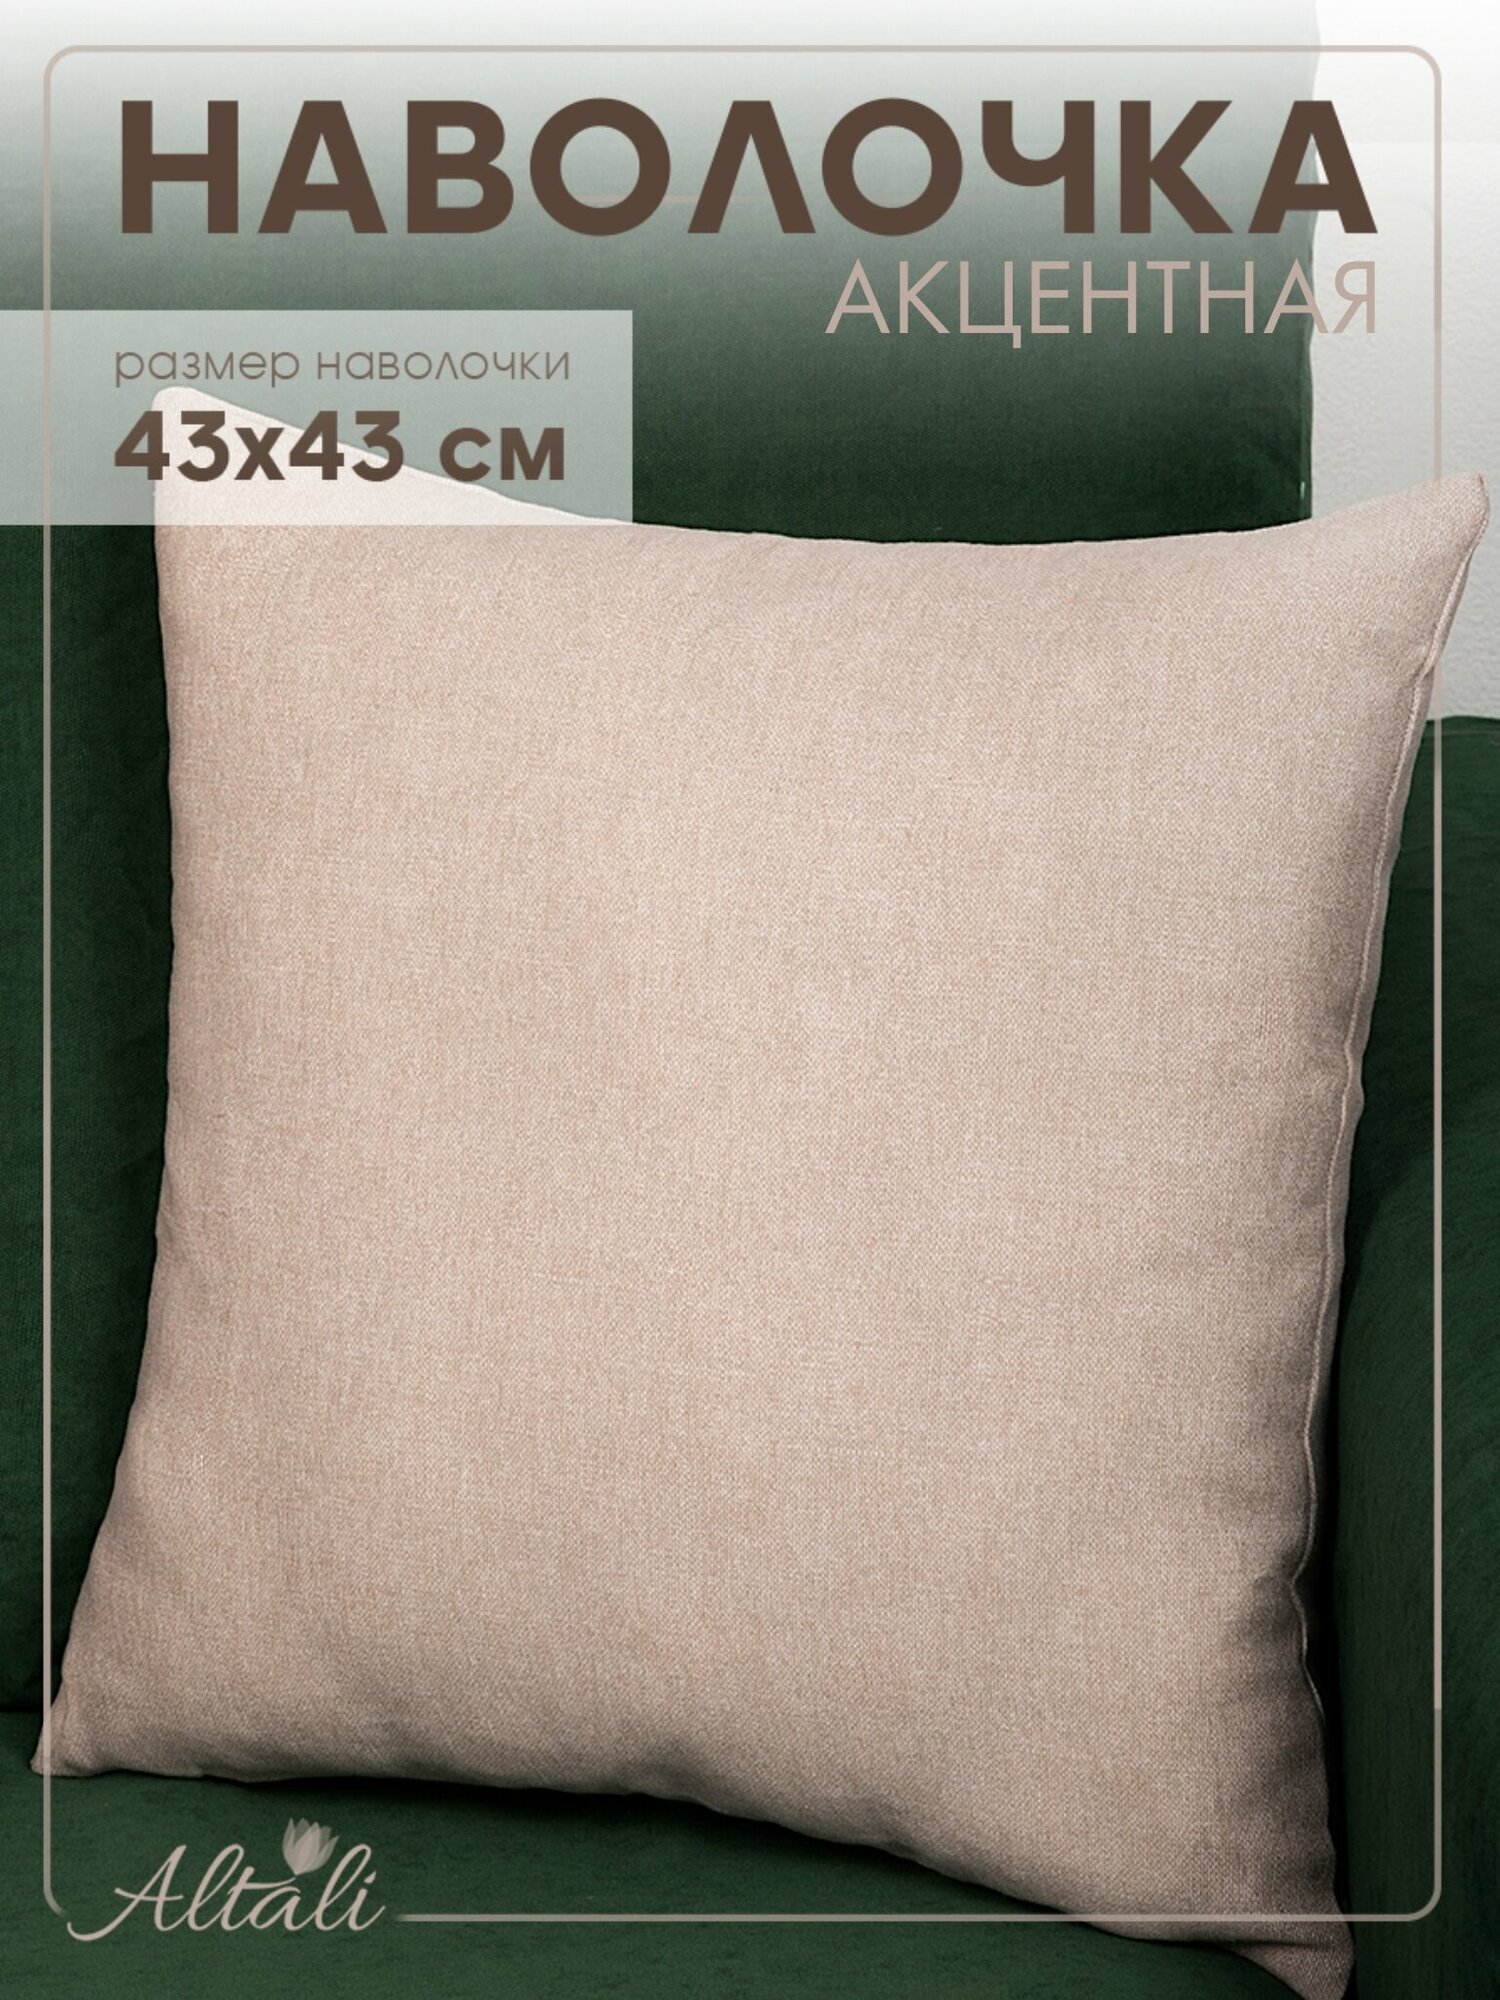 Наволочка декоративная чехол на подушку 43*43 см хлопок/ Бьянка / Altali